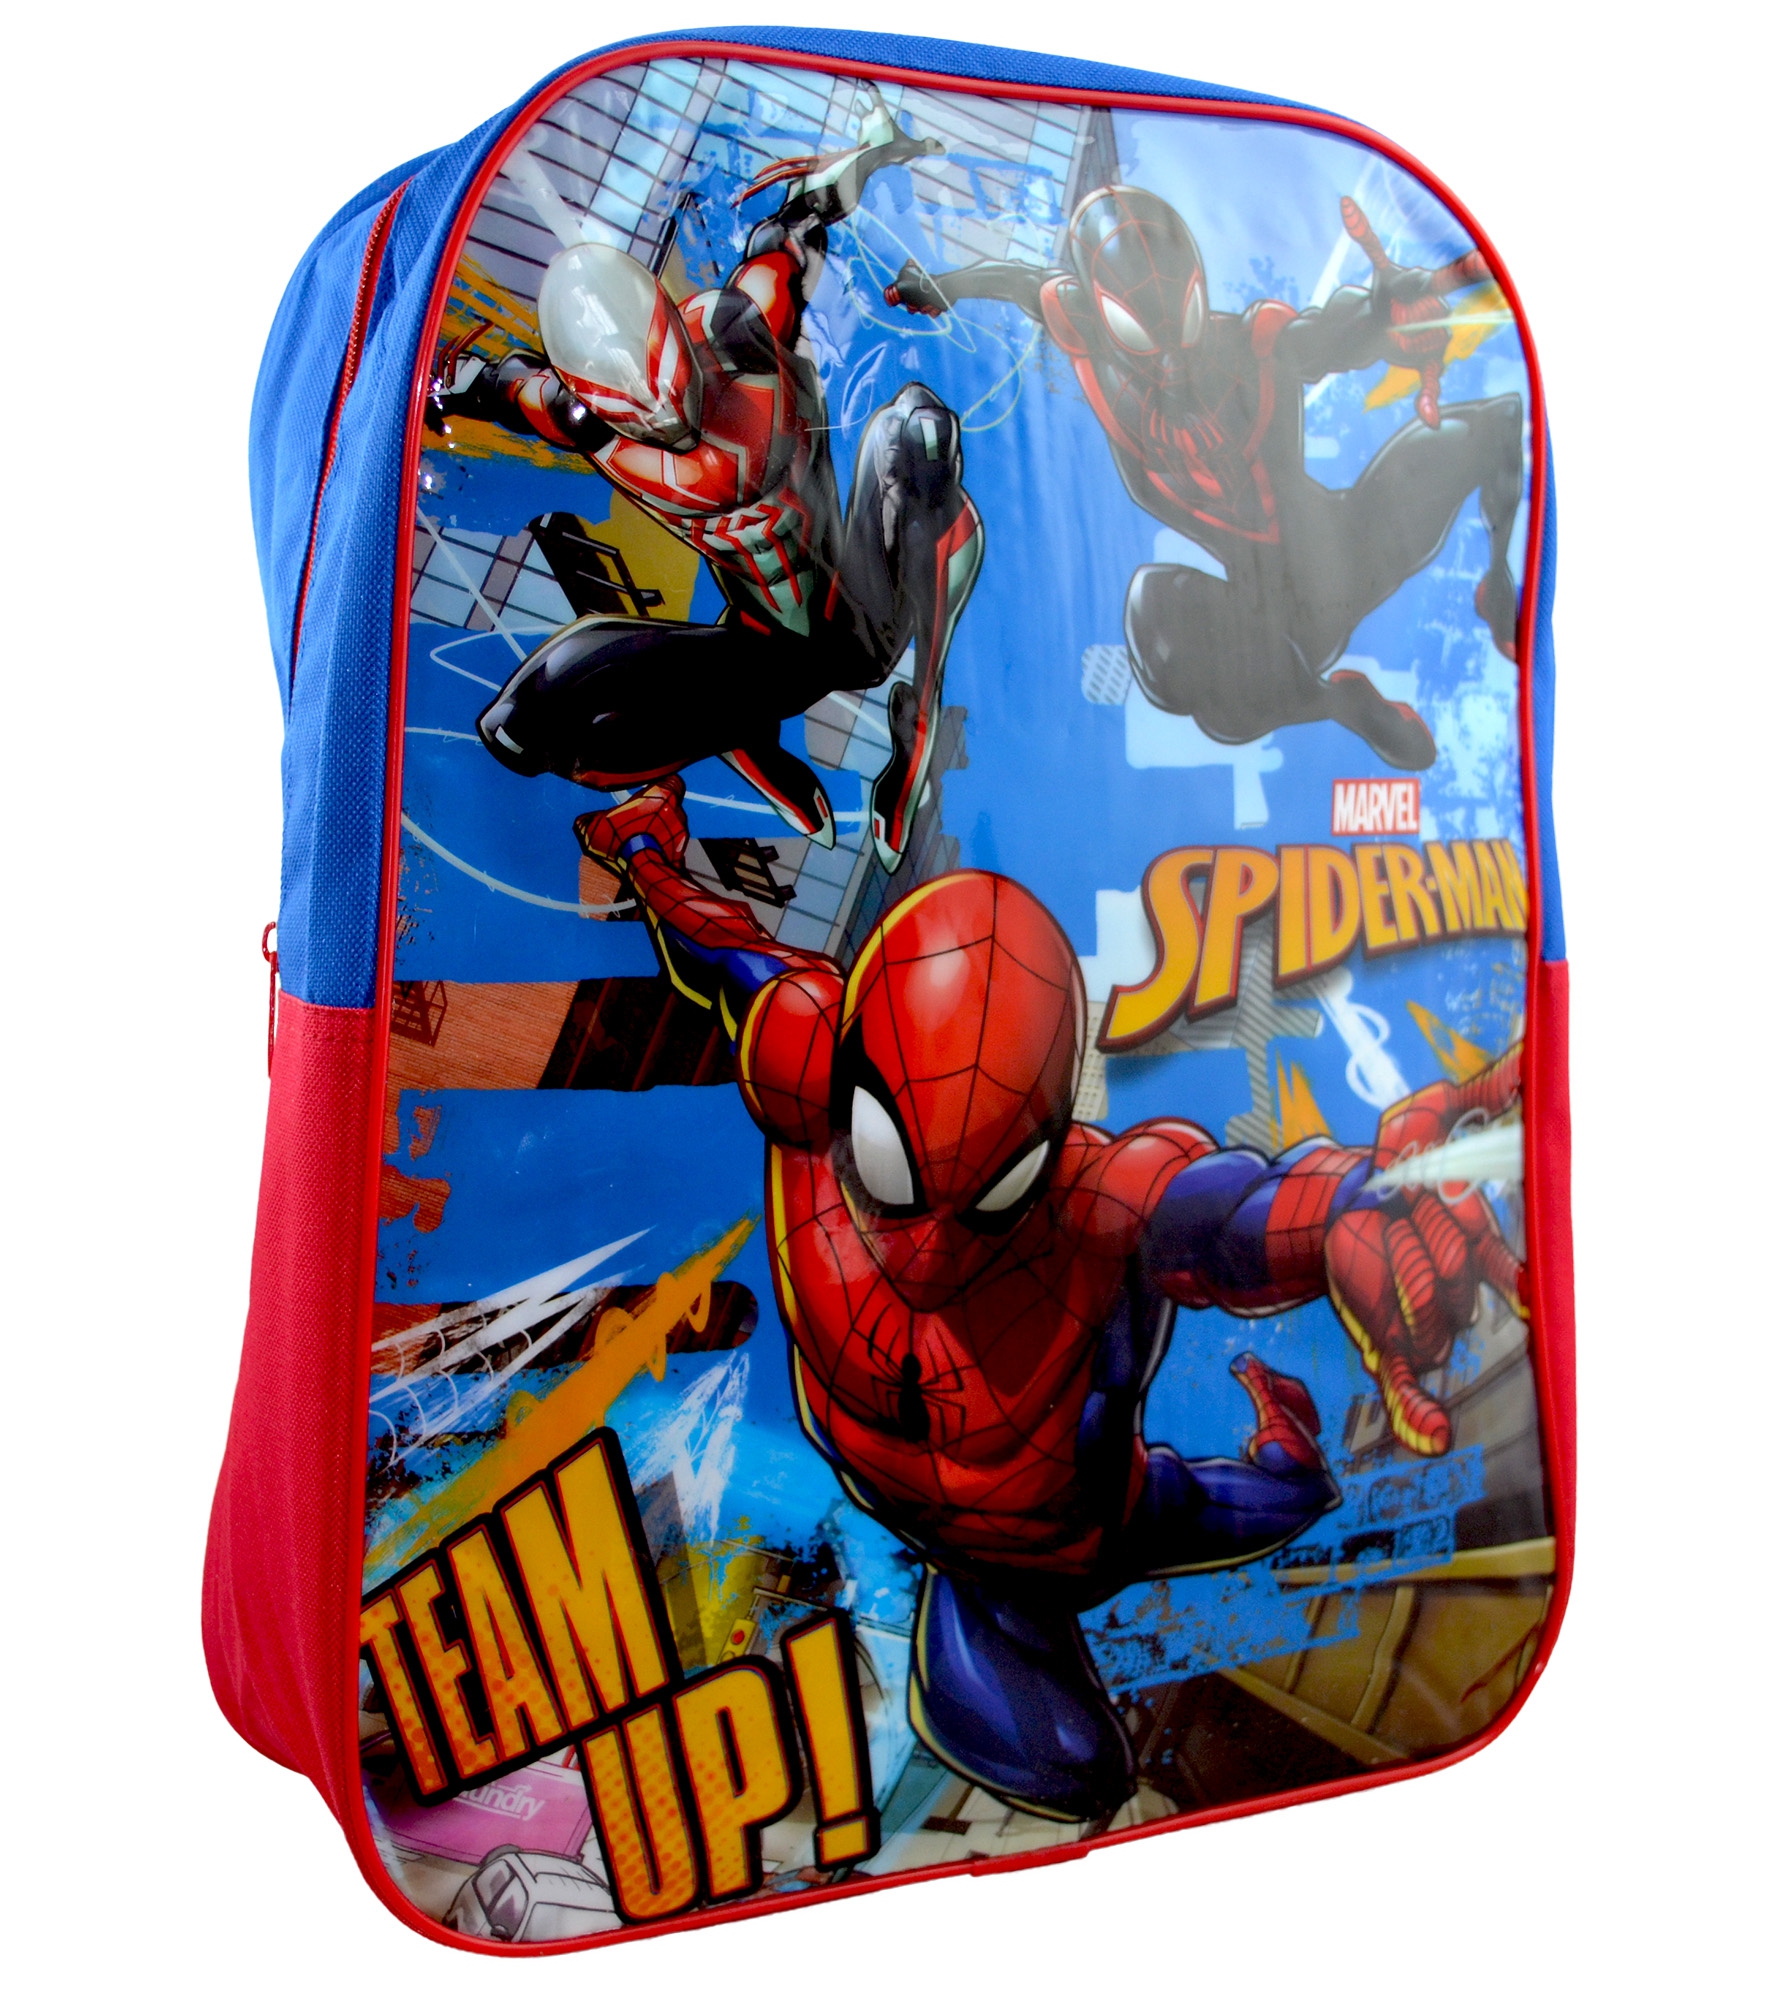 Spiderman 'Team Up' Arch School Bag Rucksack Backpack